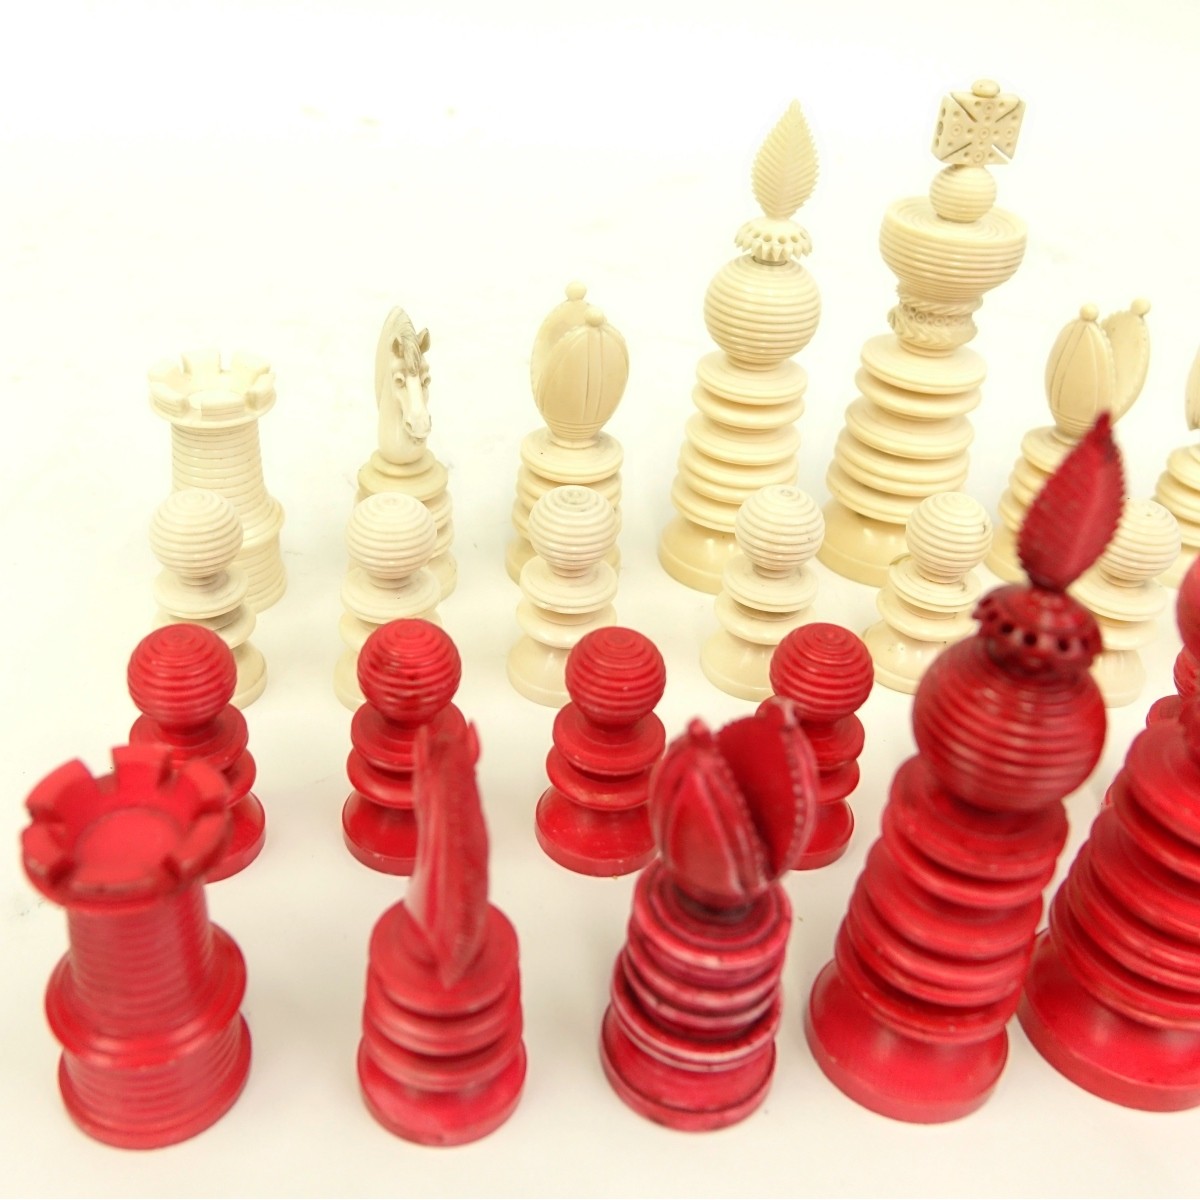 19th Century Staunton Ivory 32 Piece Chess Set